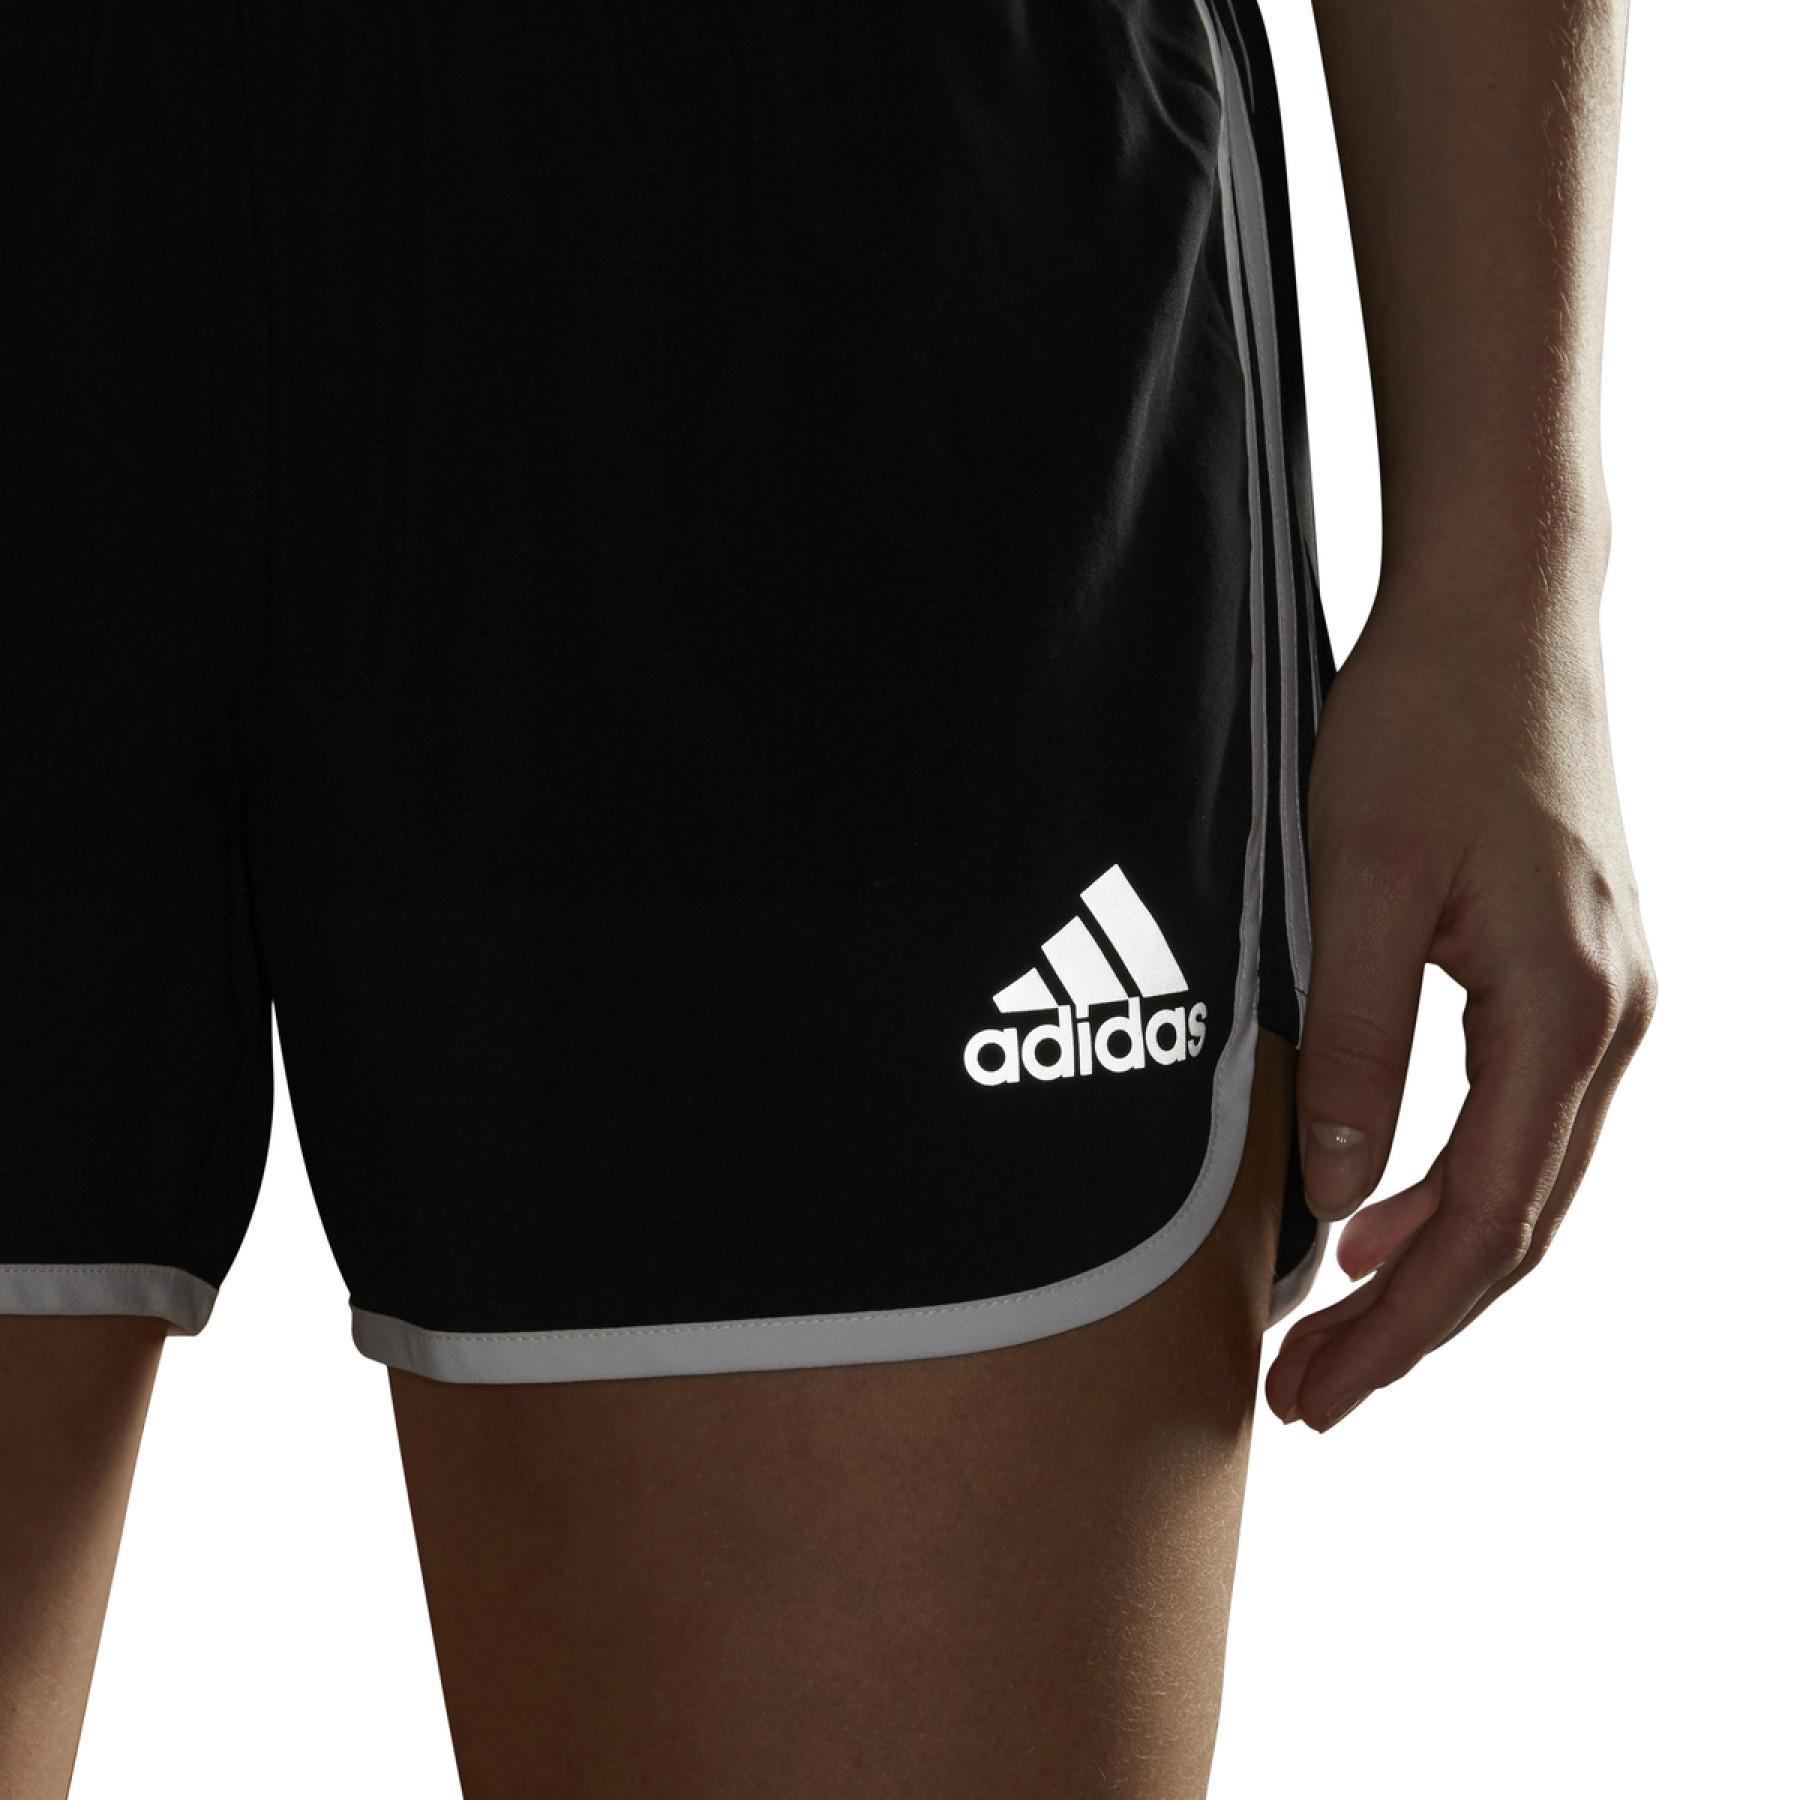 Women's shorts adidas M20 Primeblue